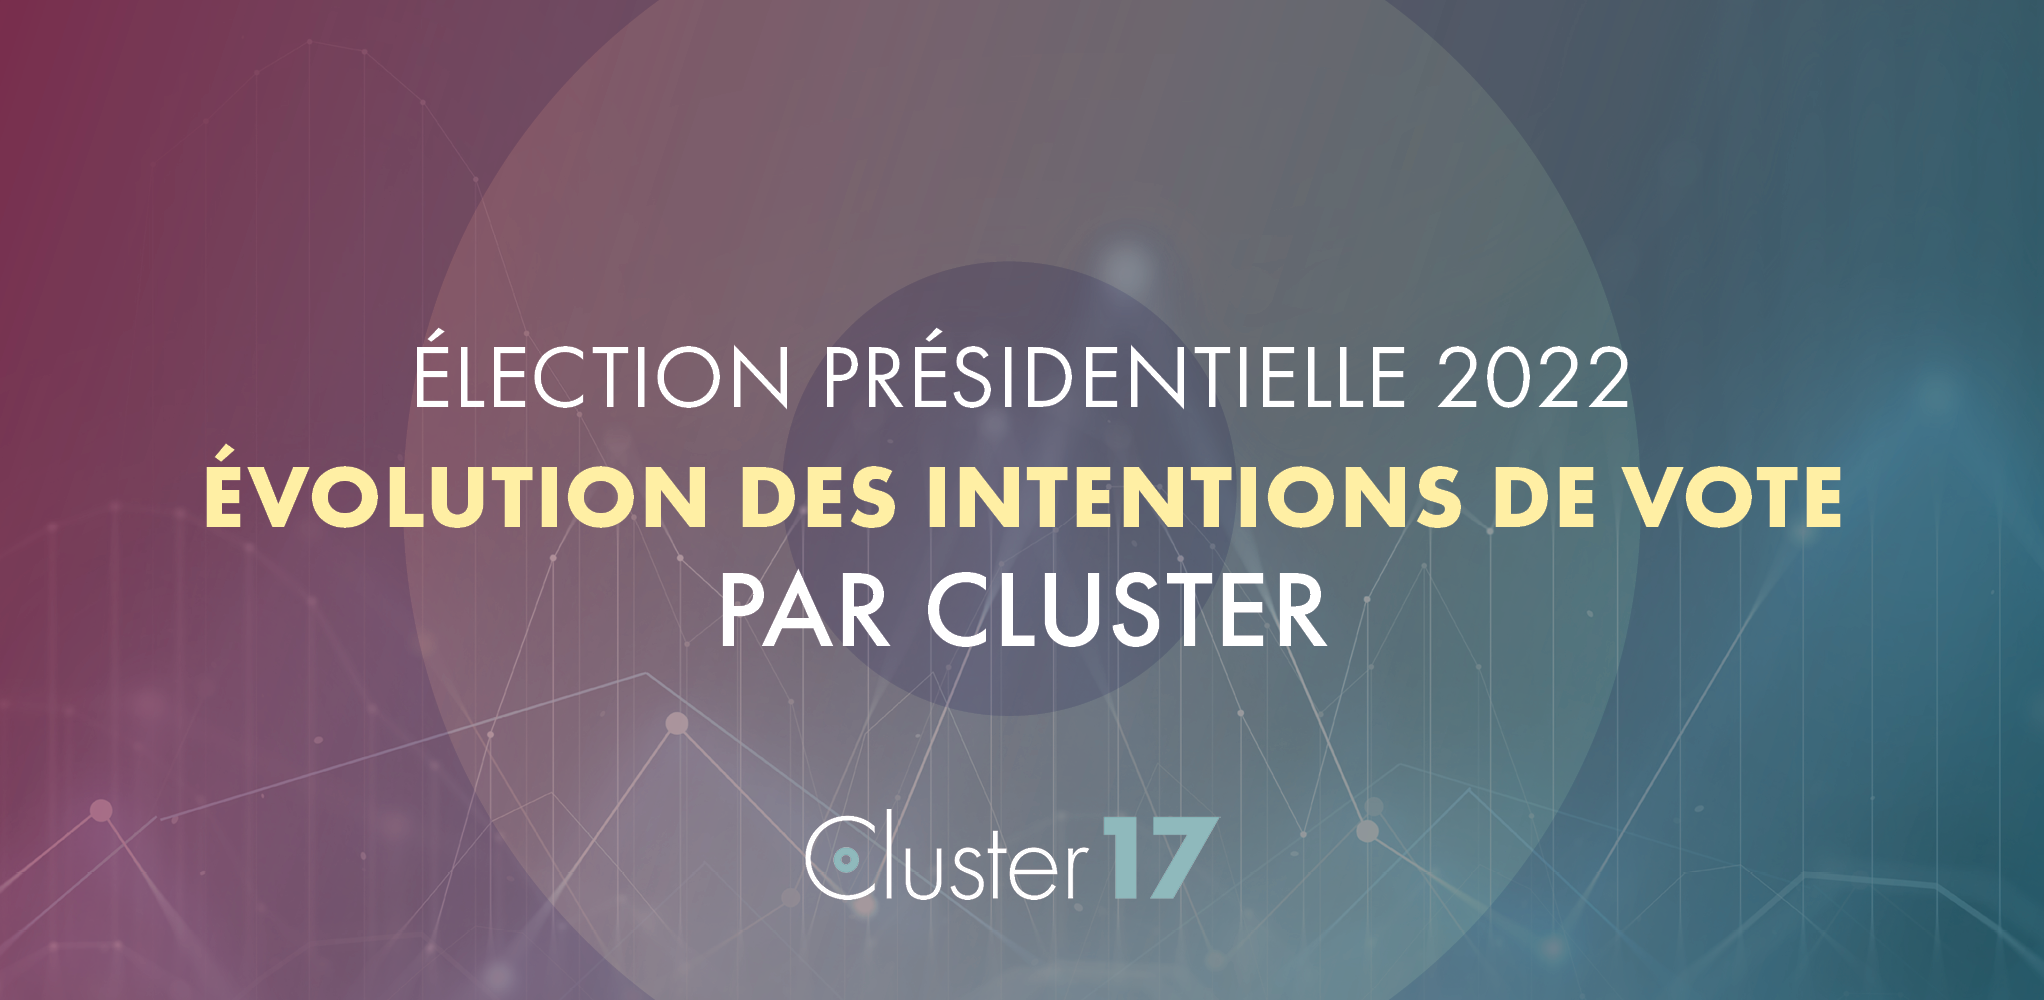 Evolution intentions de vote cluster